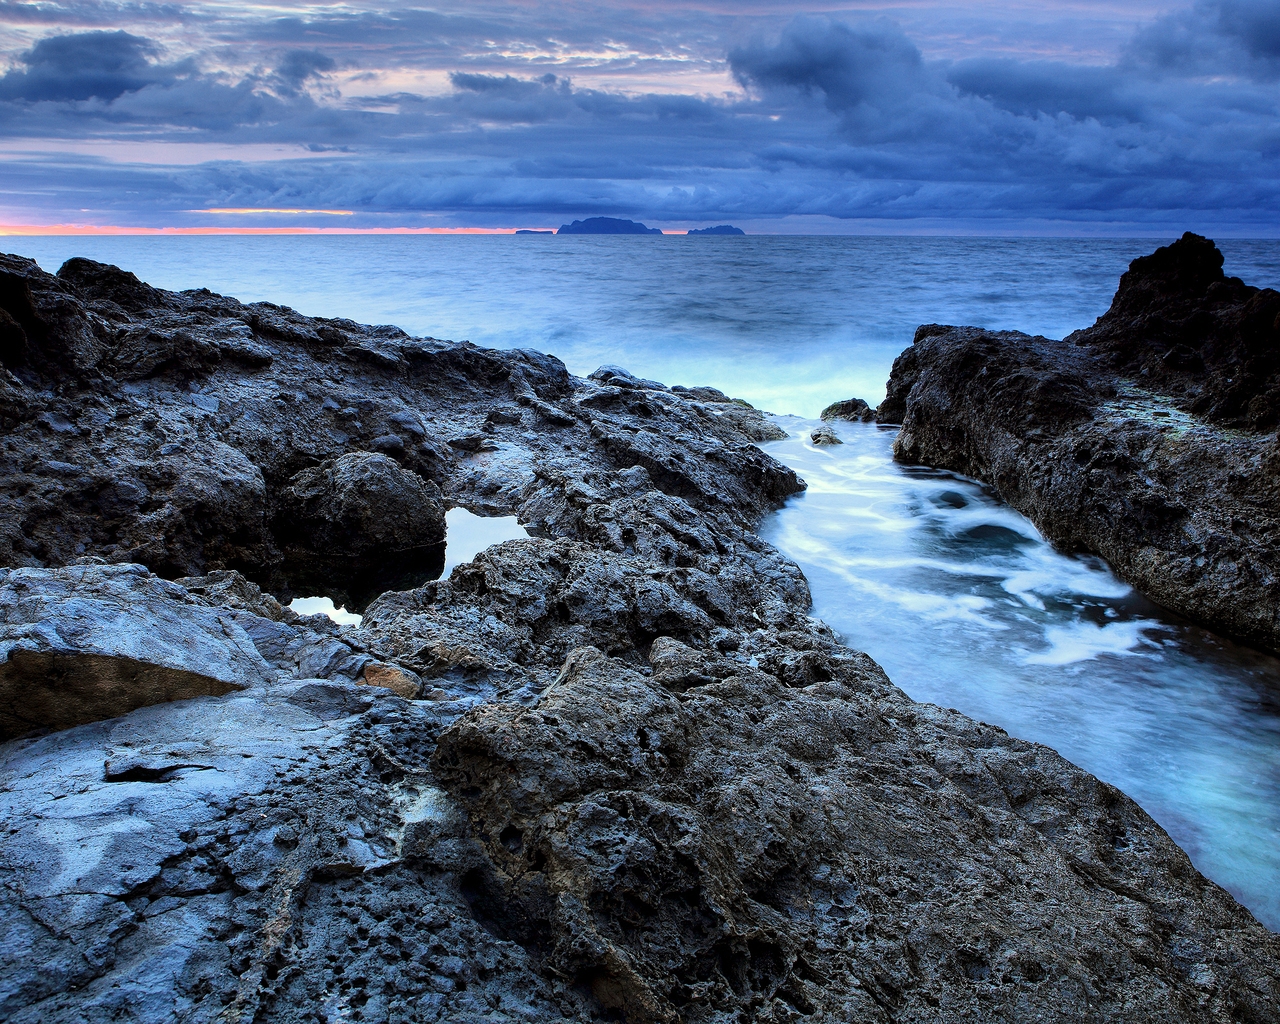 Sea Stones for 1280 x 1024 resolution